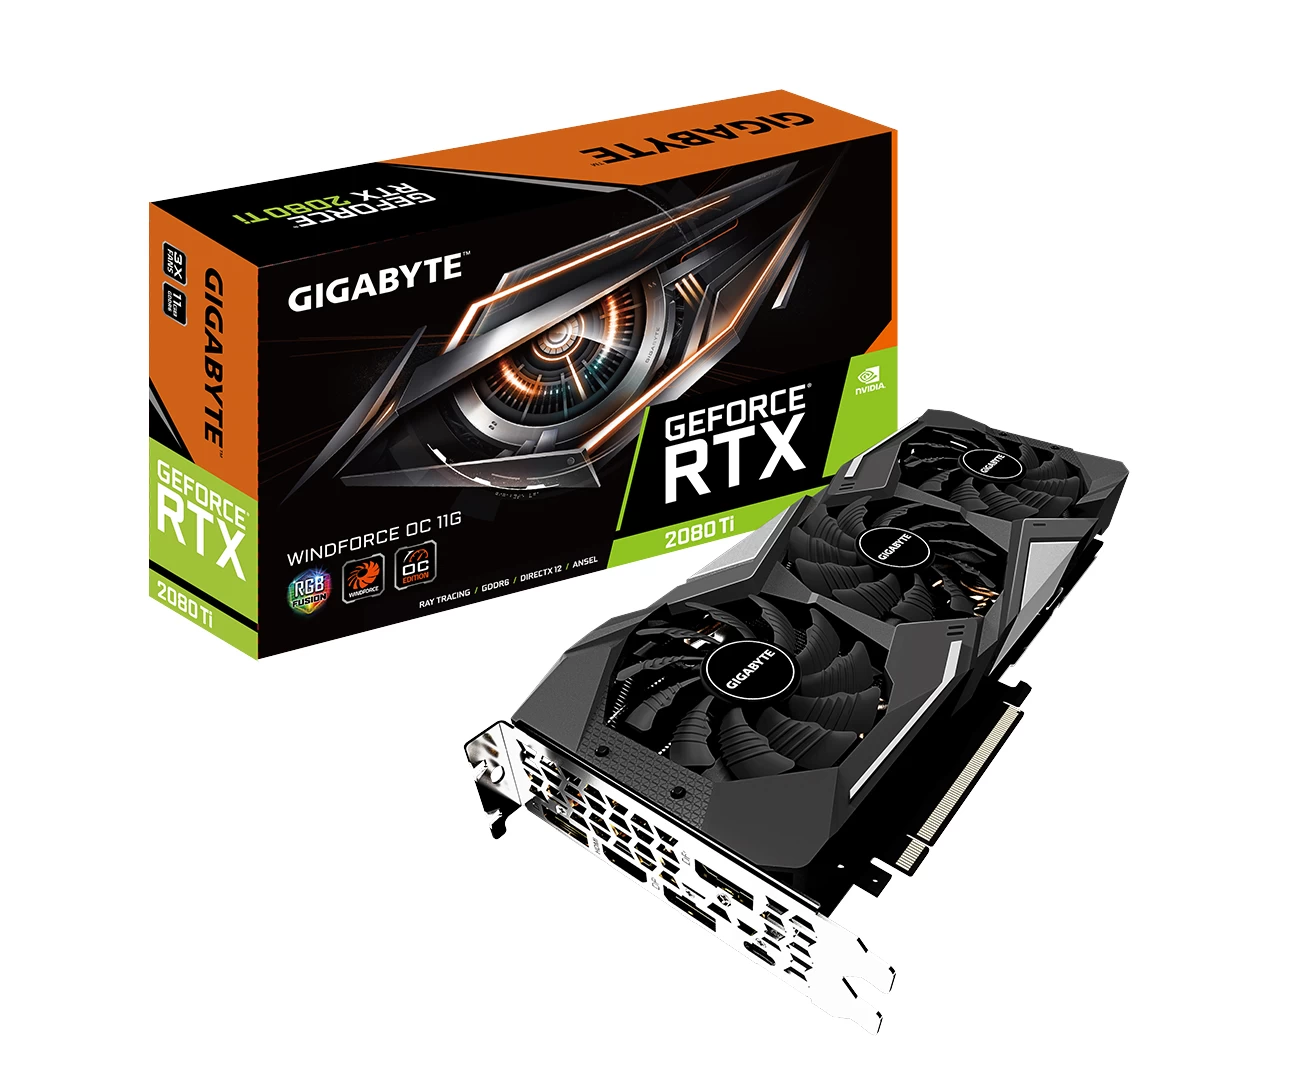 GIGABYTE GeForce RTX 2080 Ti WINDFORCE OC 11G Package